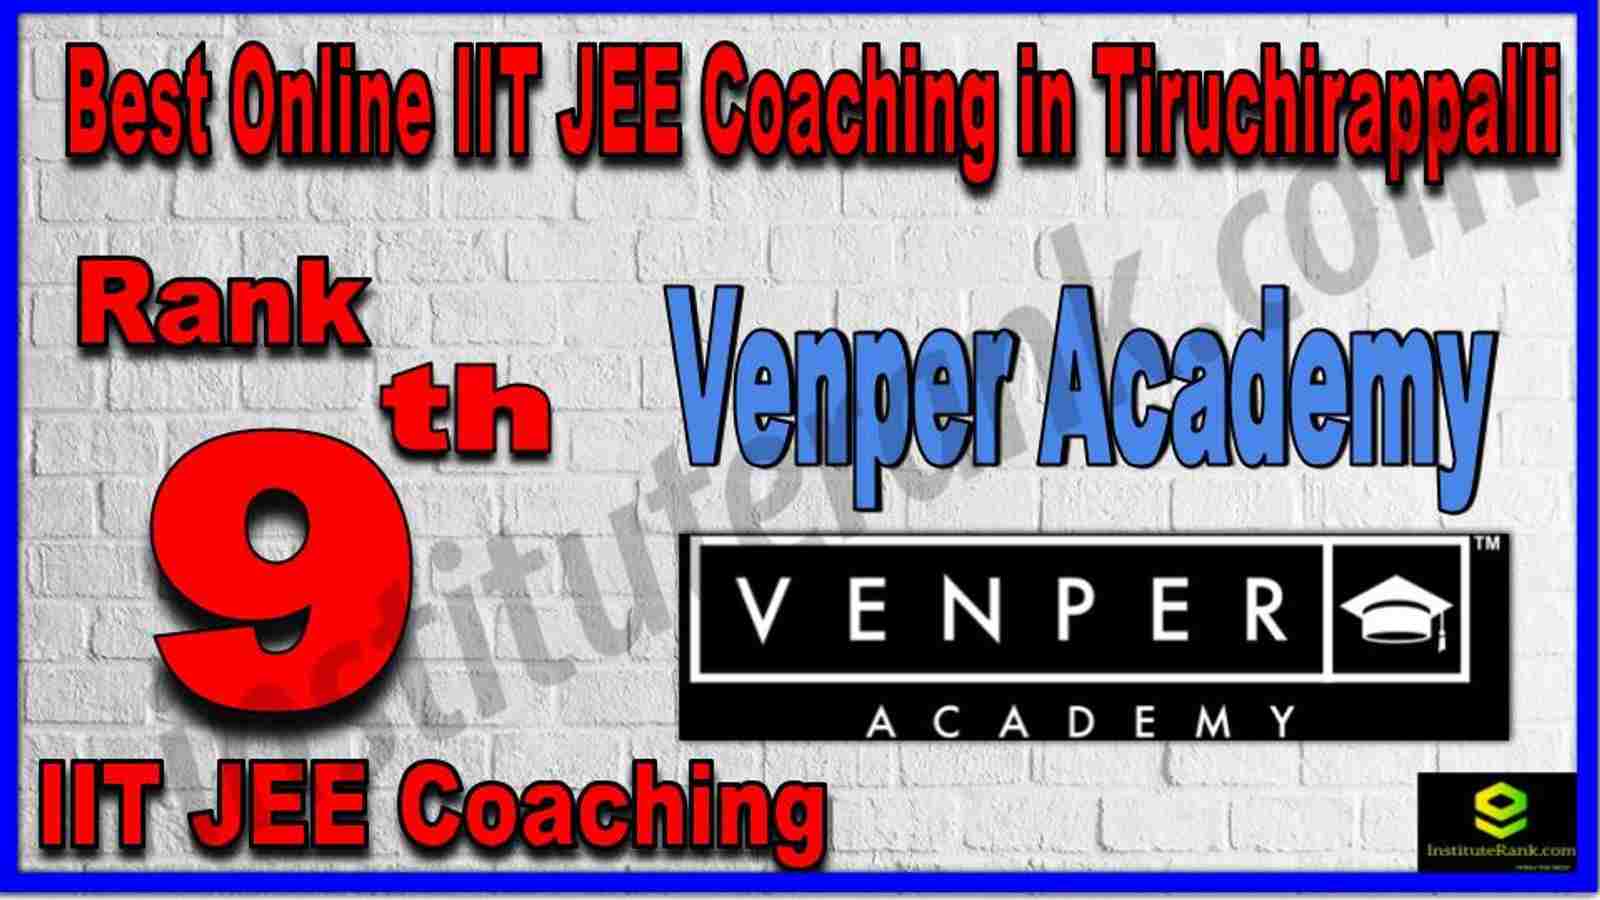 Rank 9th Best Online IIT JEE Coaching in Tiruchirappalli